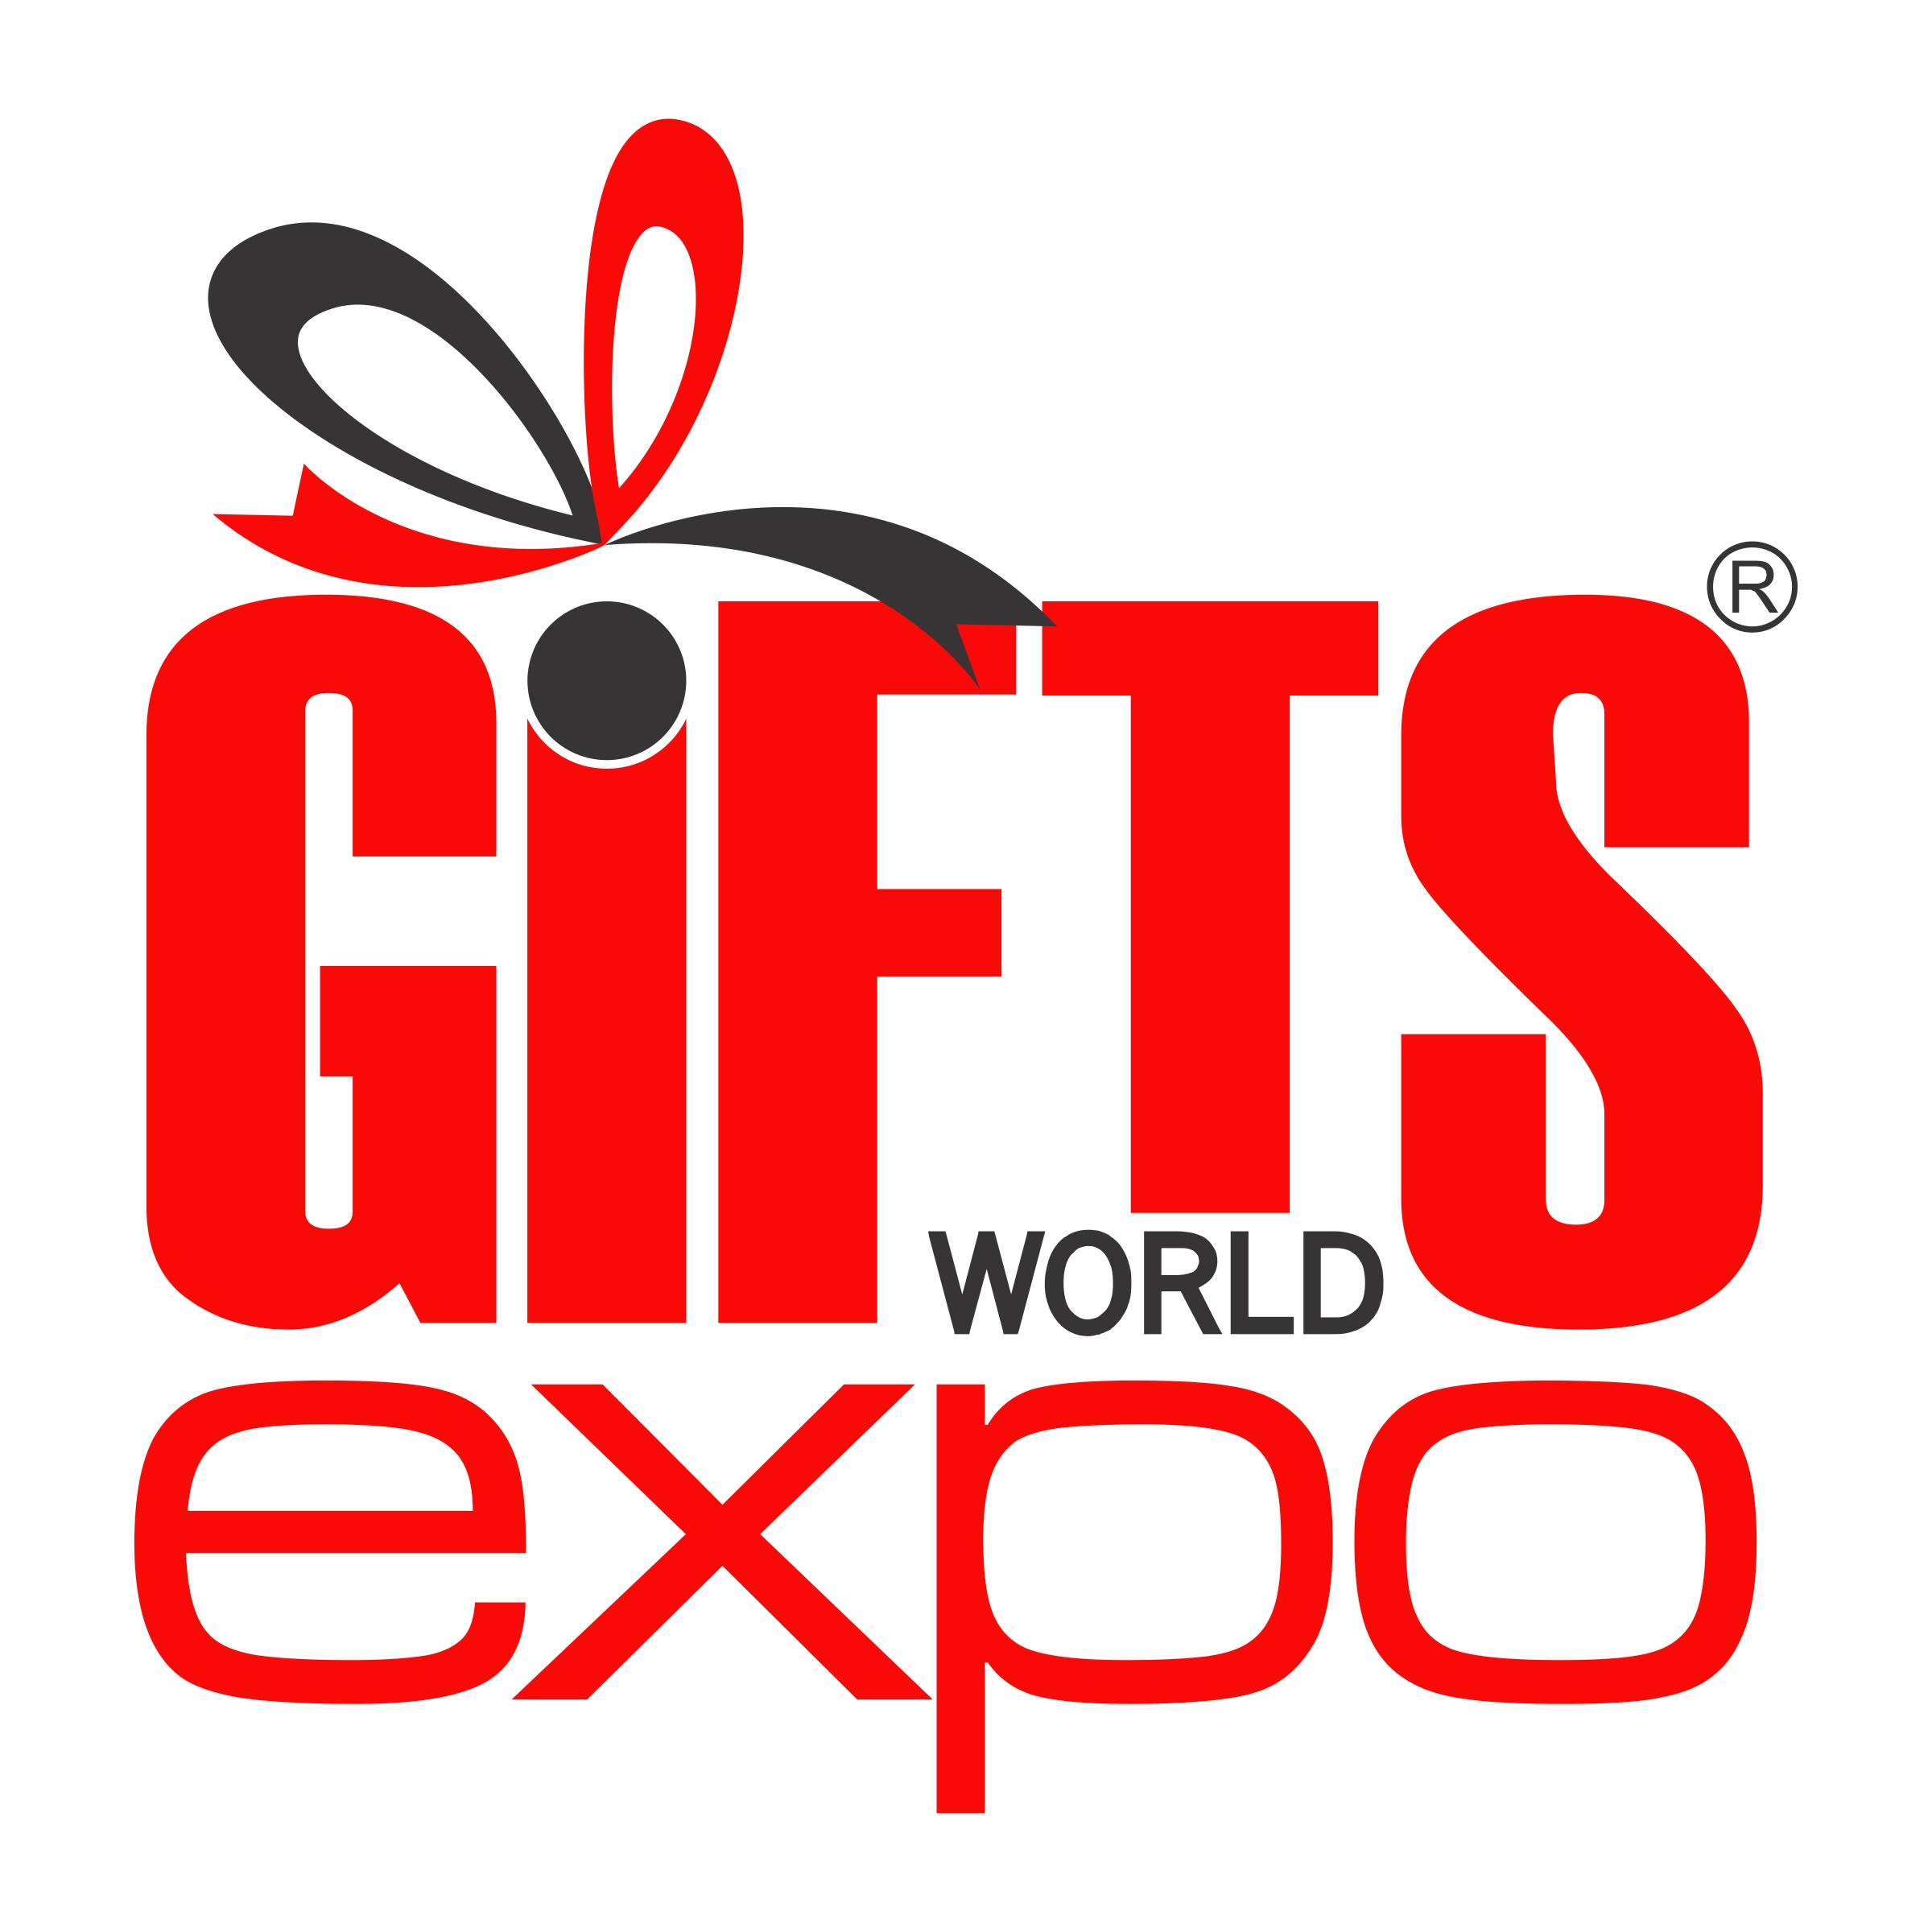 Gifts World Expo 2020 - Online Sourcing Show, New Delhi, Delhi, India